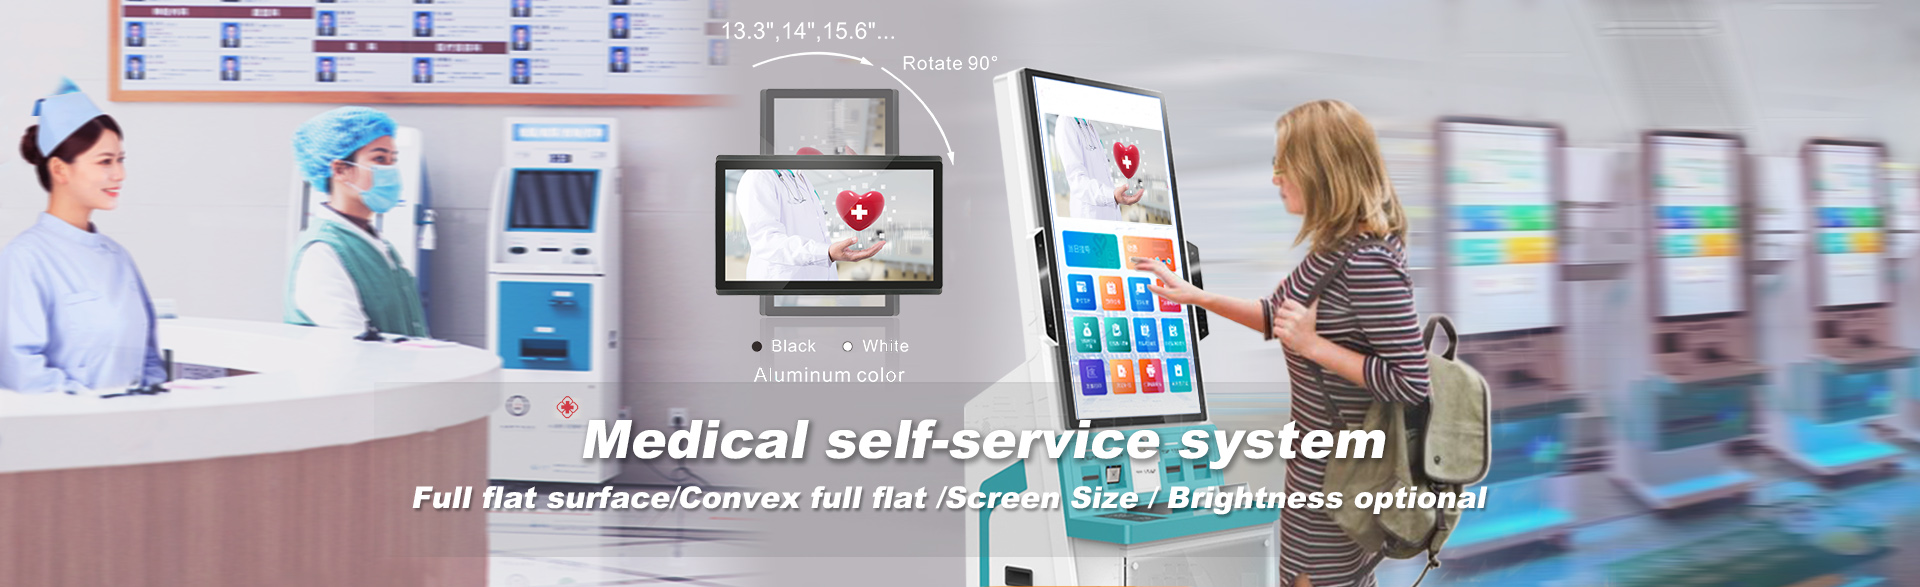 Medical self-service system